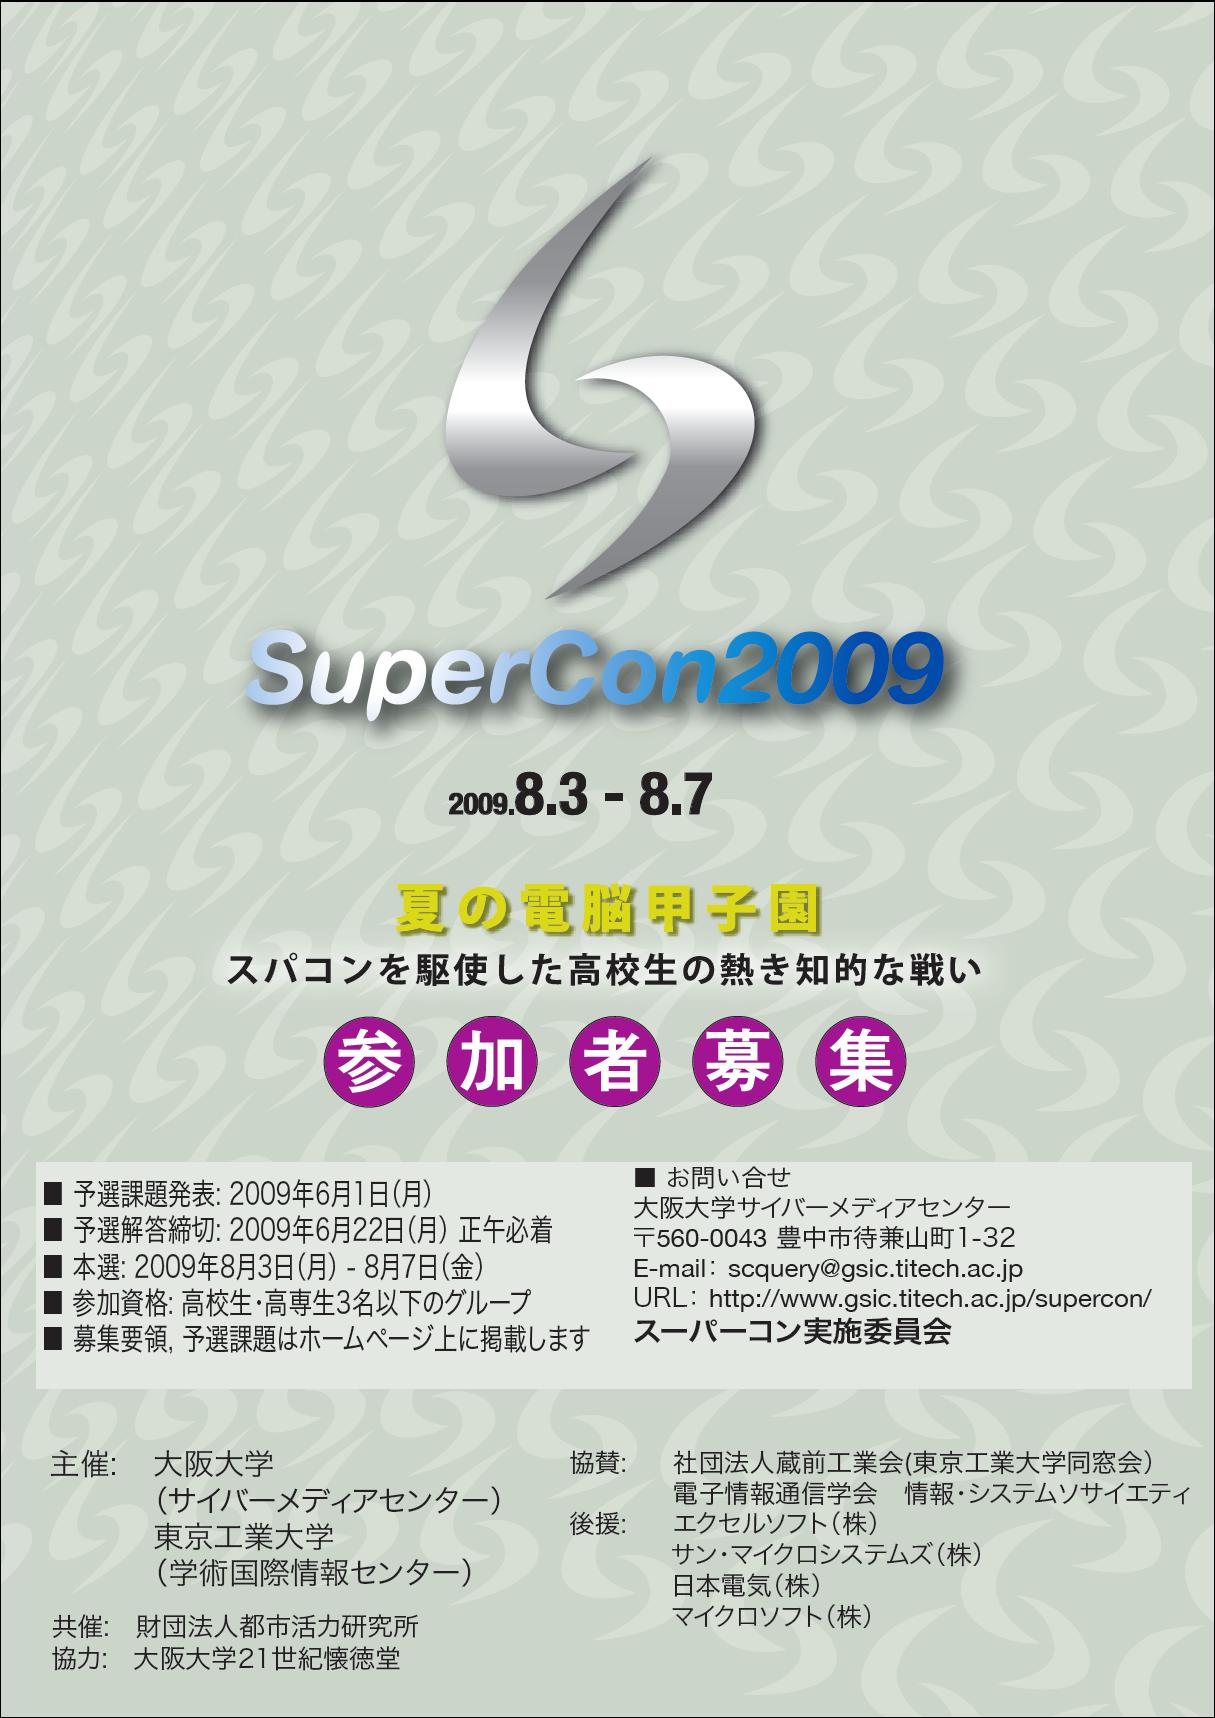 supercon2009.jpg